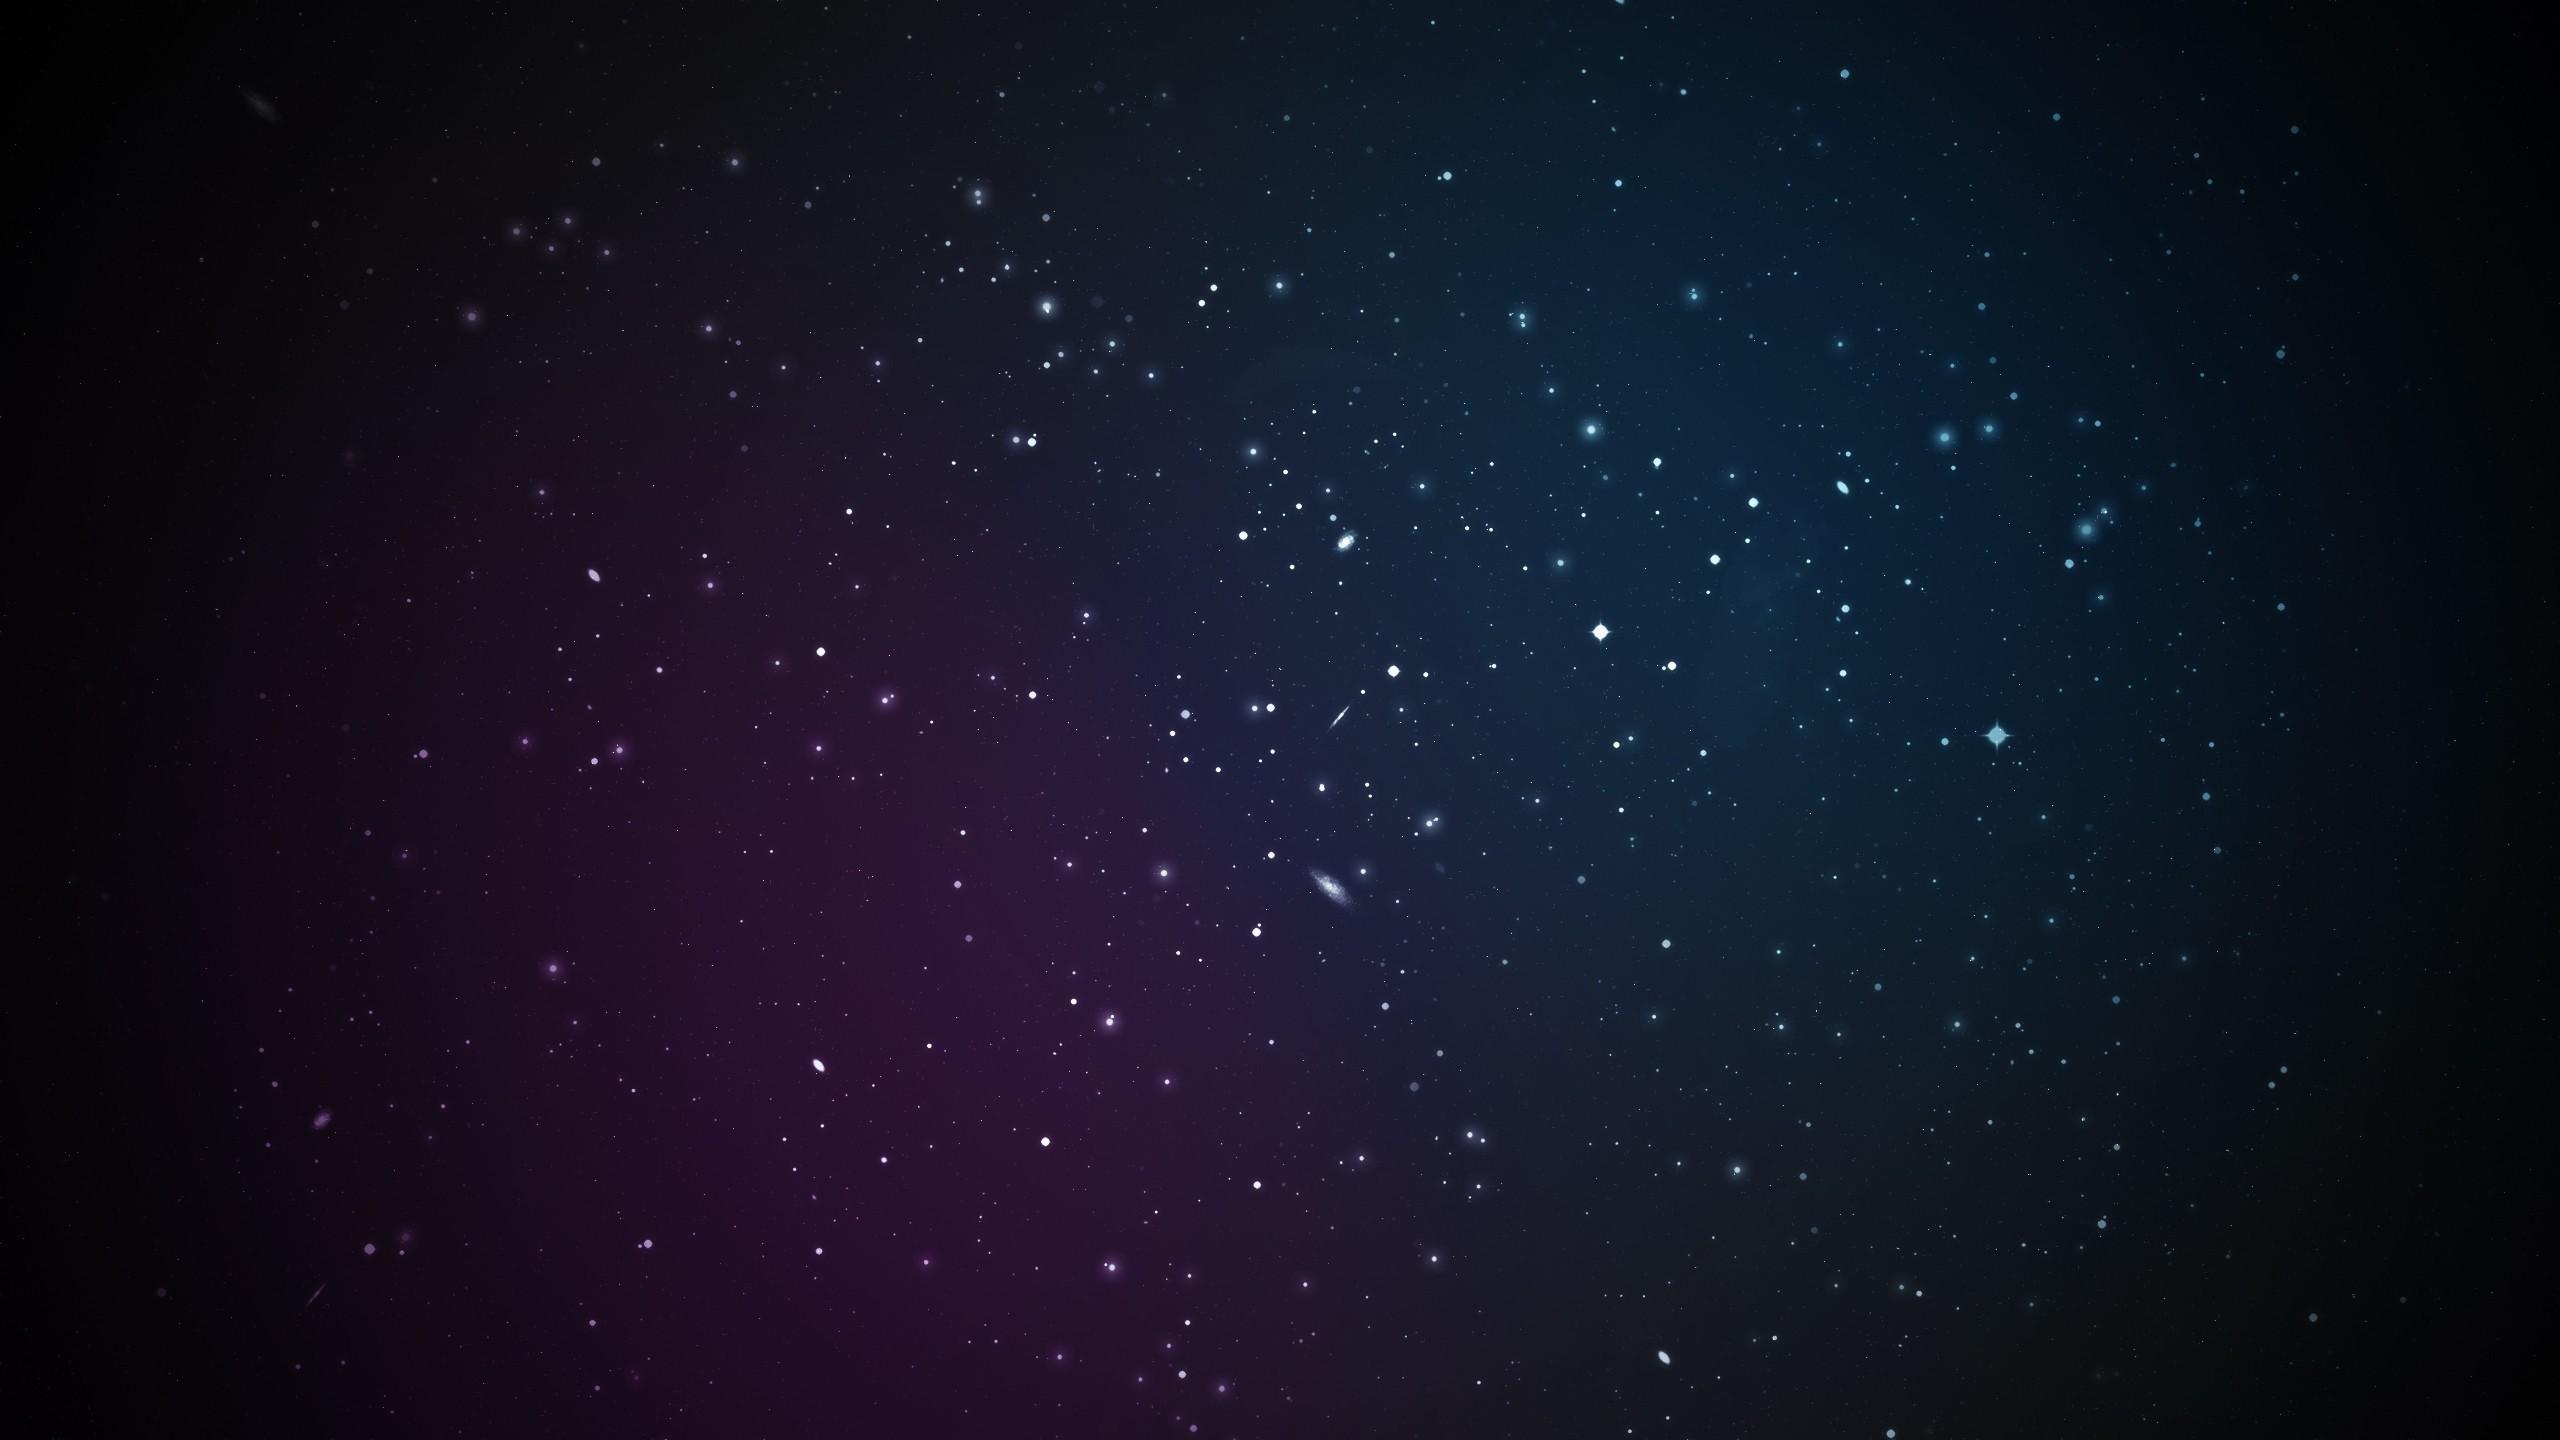 Galaxy Starry Night Background HD Wallpaper Cool Image 4k